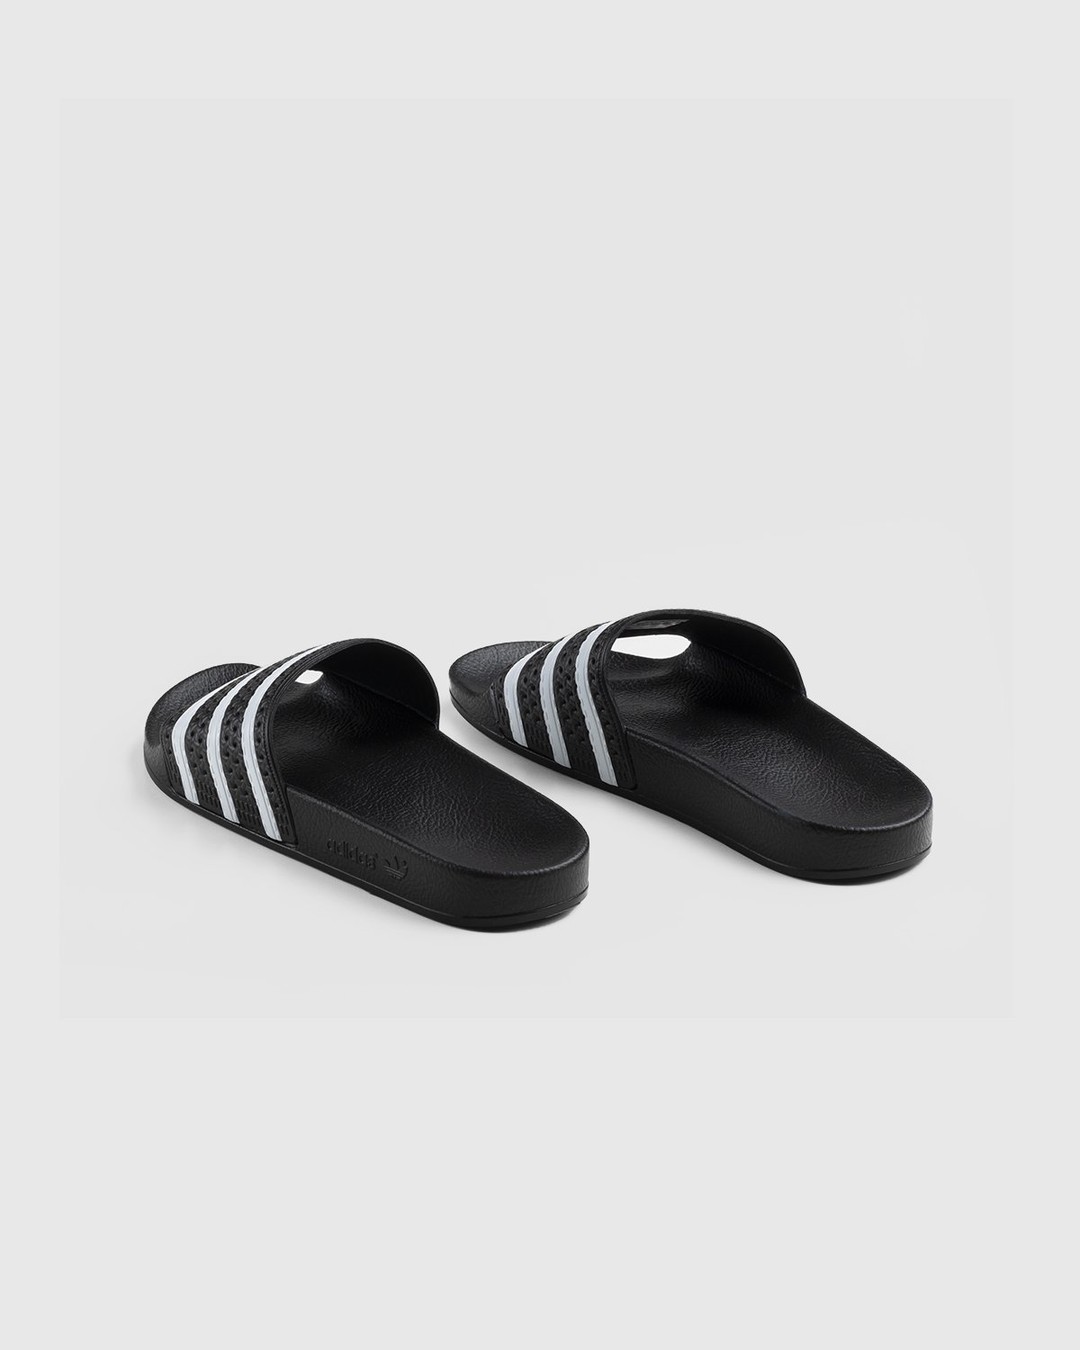 Adidas – Adilette Core Black White Core Black - Sneakers - Black - Image 4